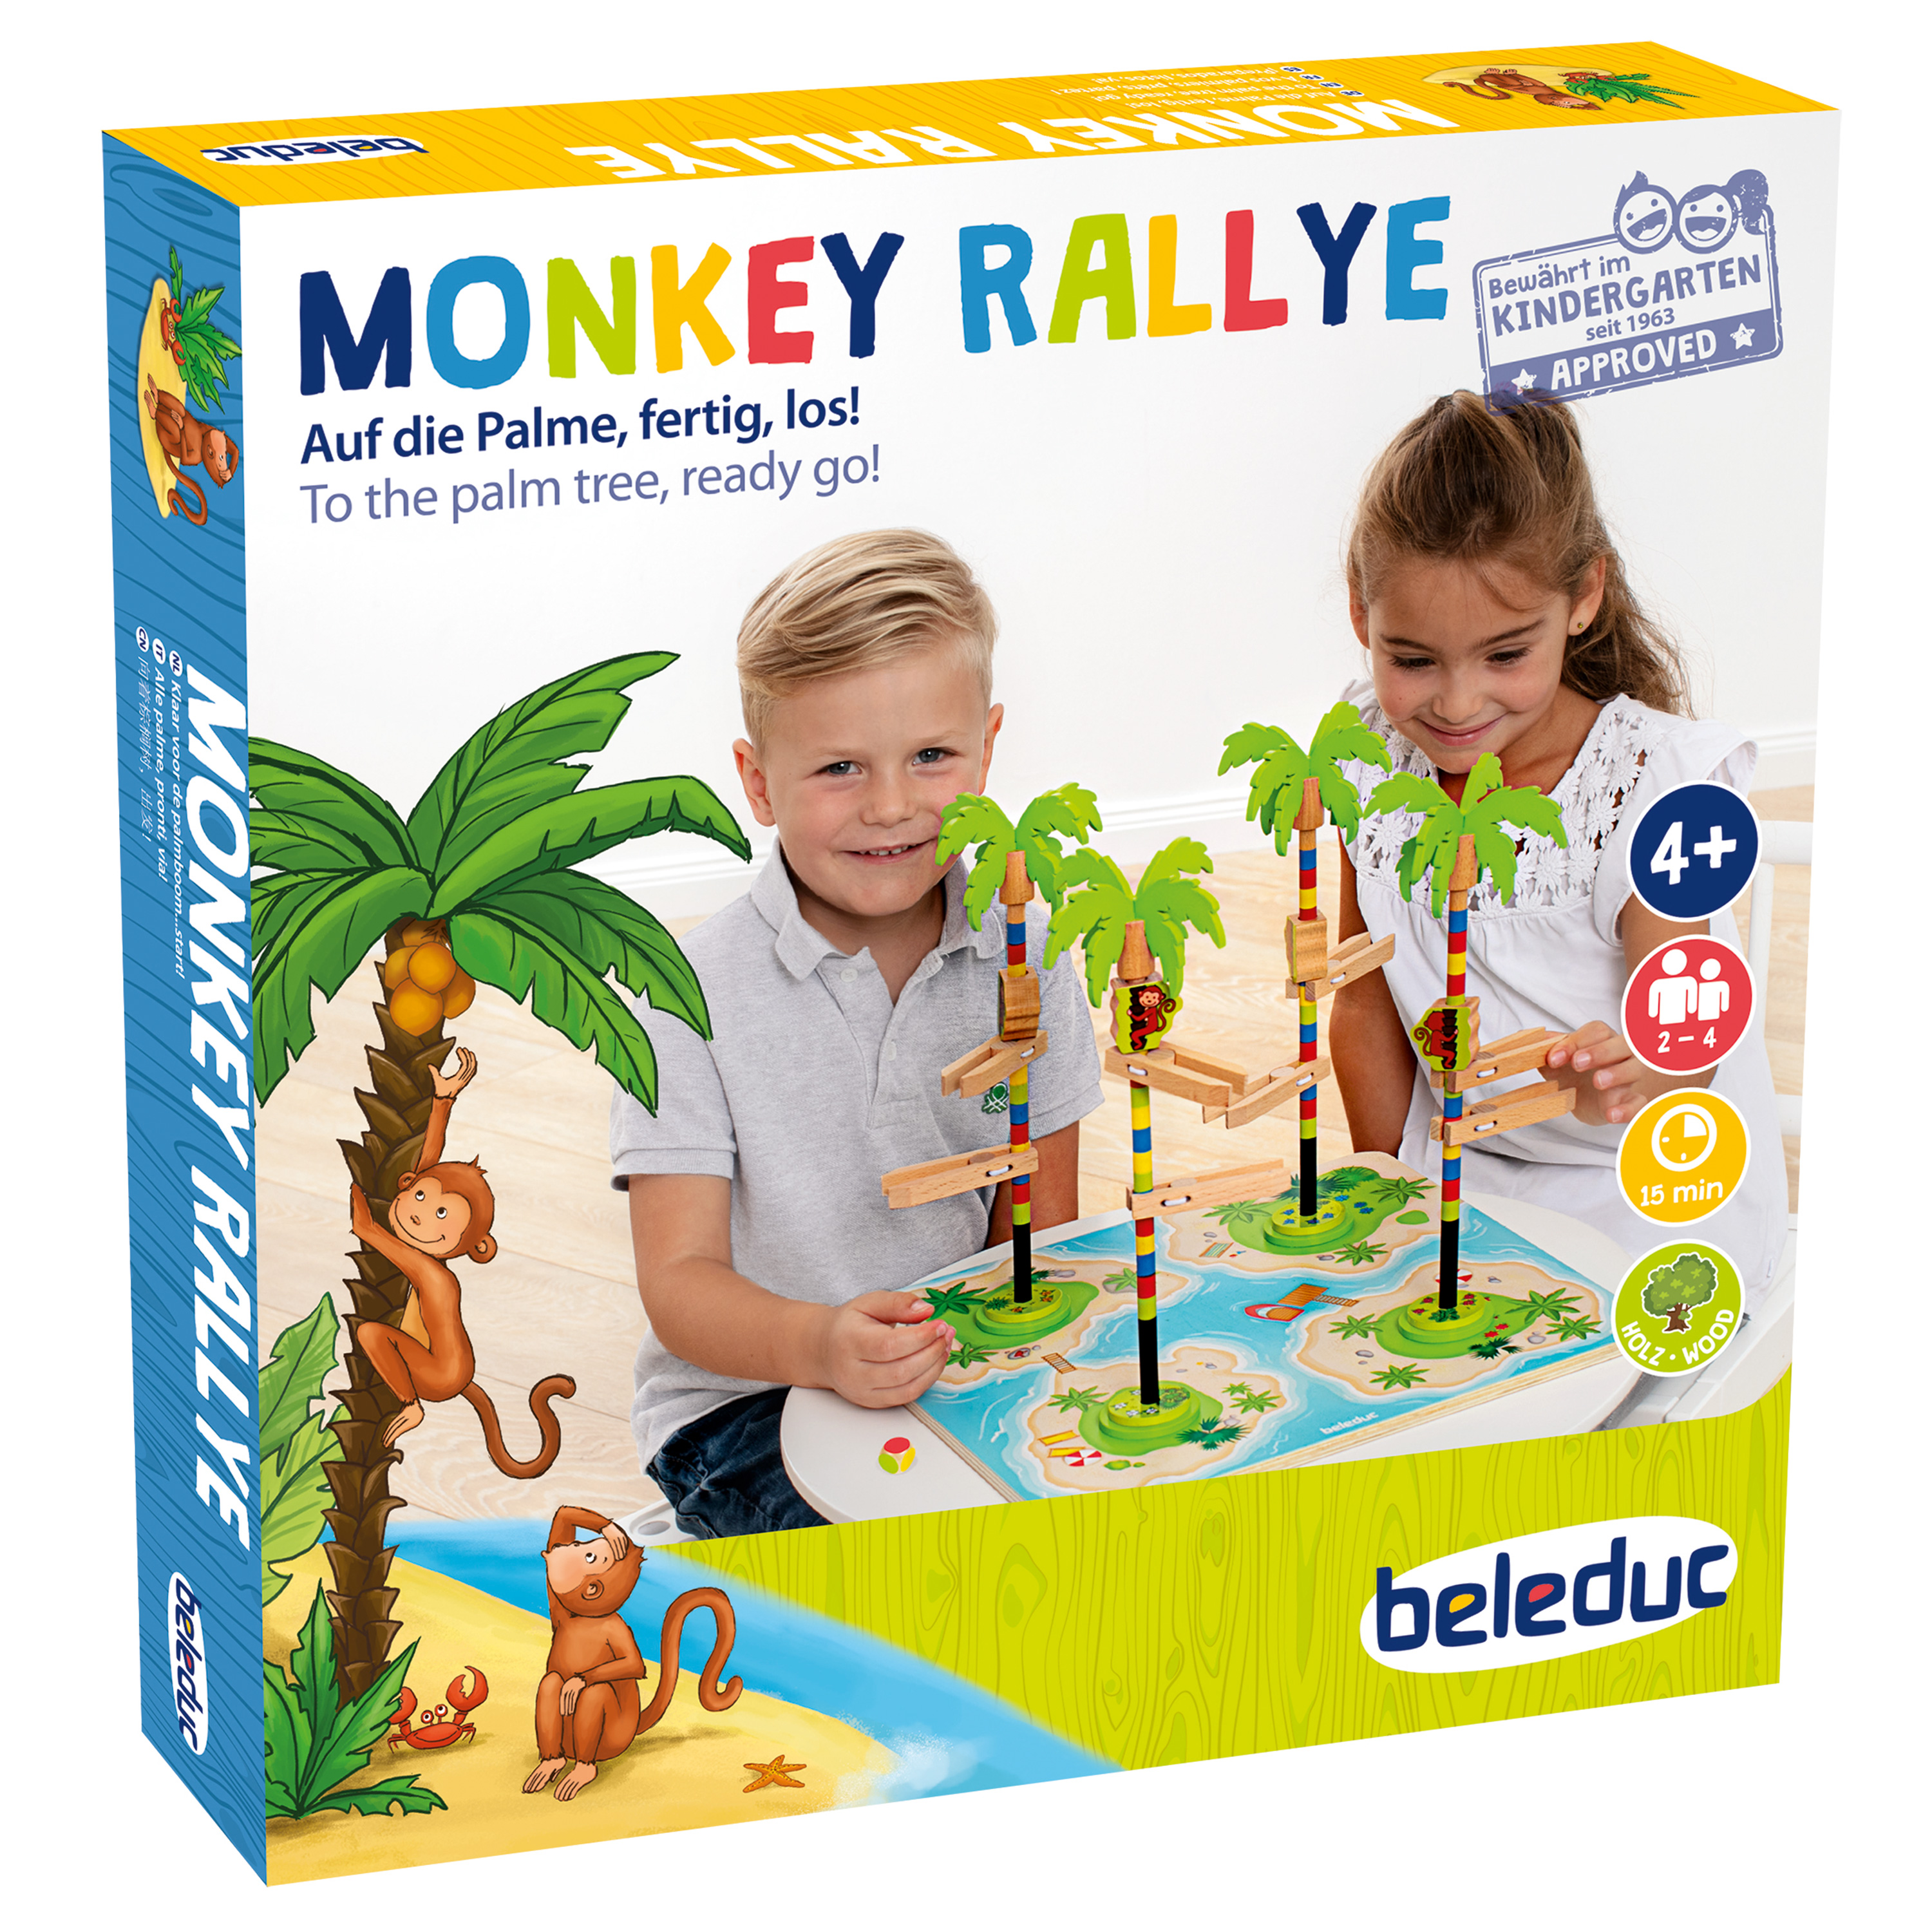 Monkey Rallye – Affen-Klettern